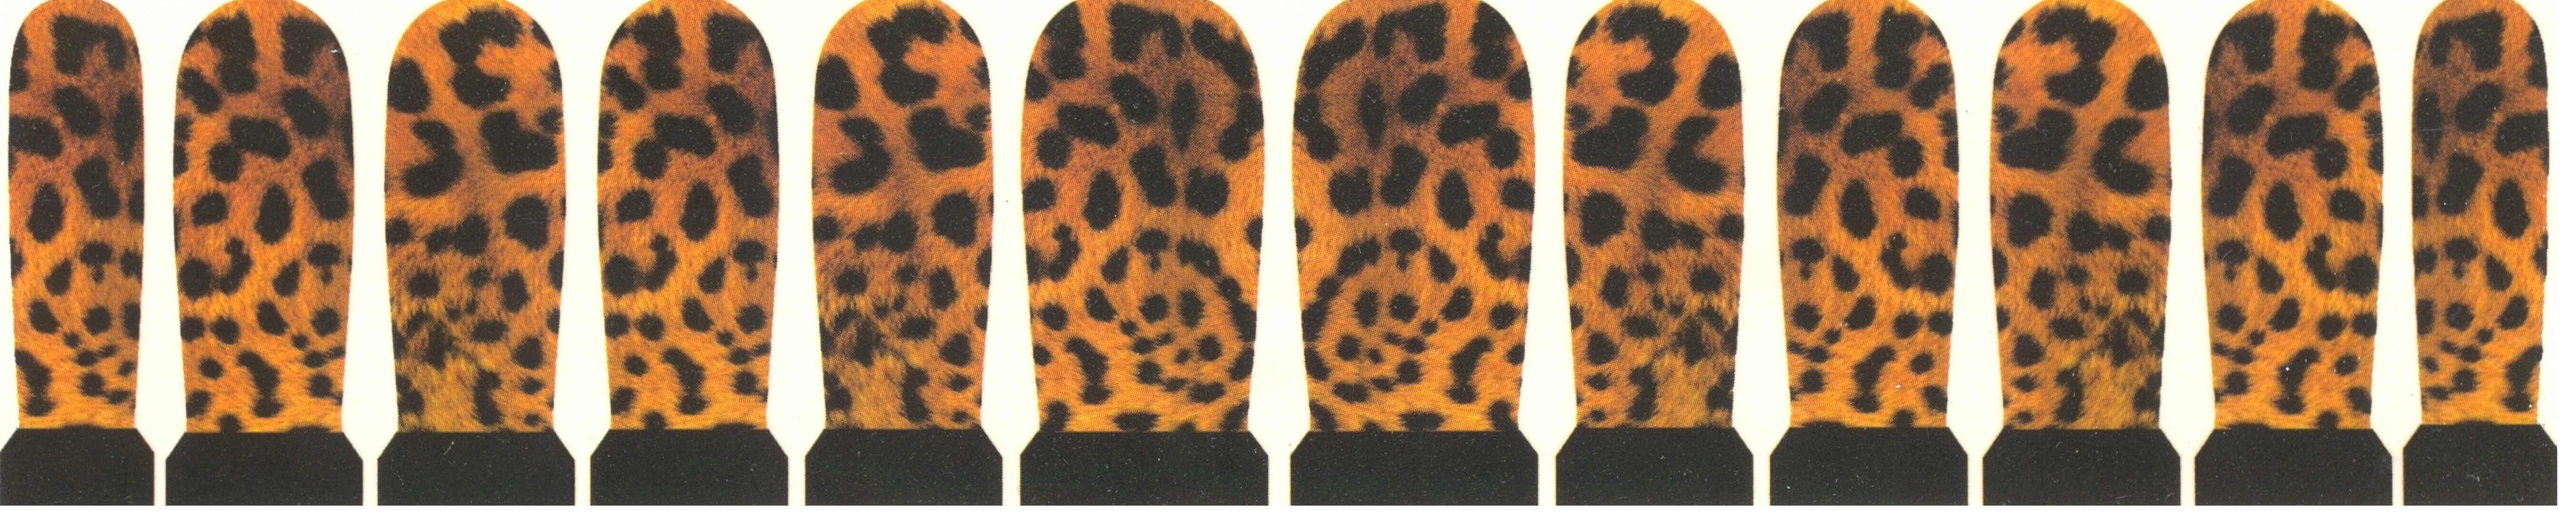 Jaguar Print